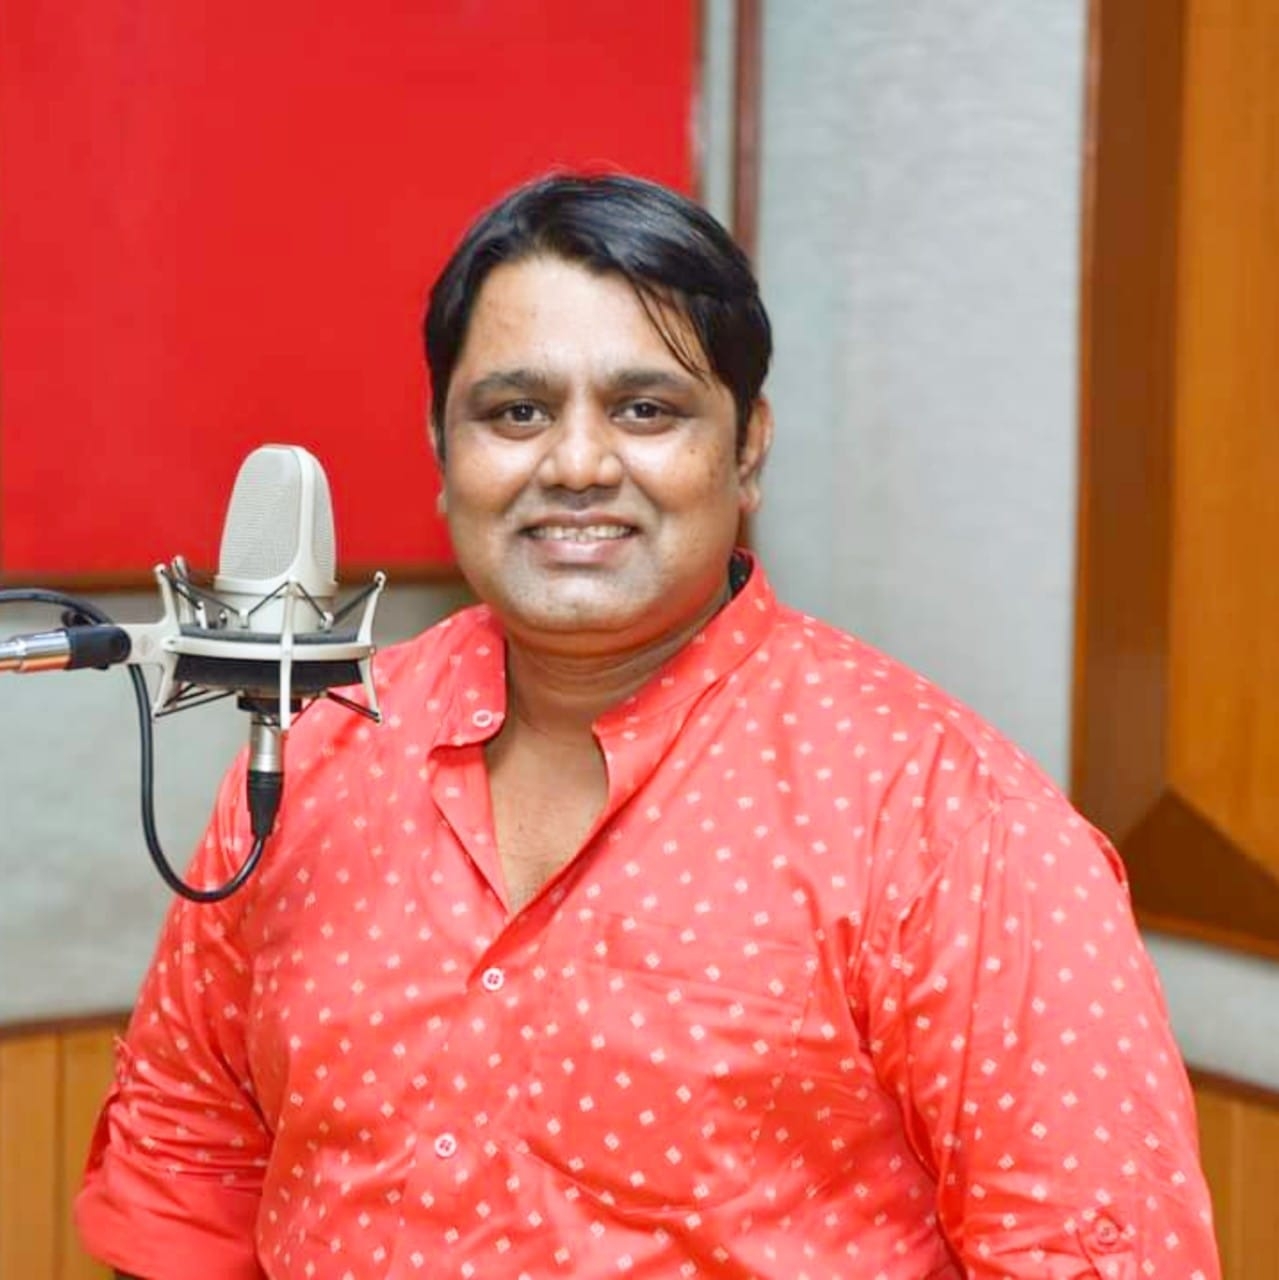 Marathi Singer Mangesh Chavan